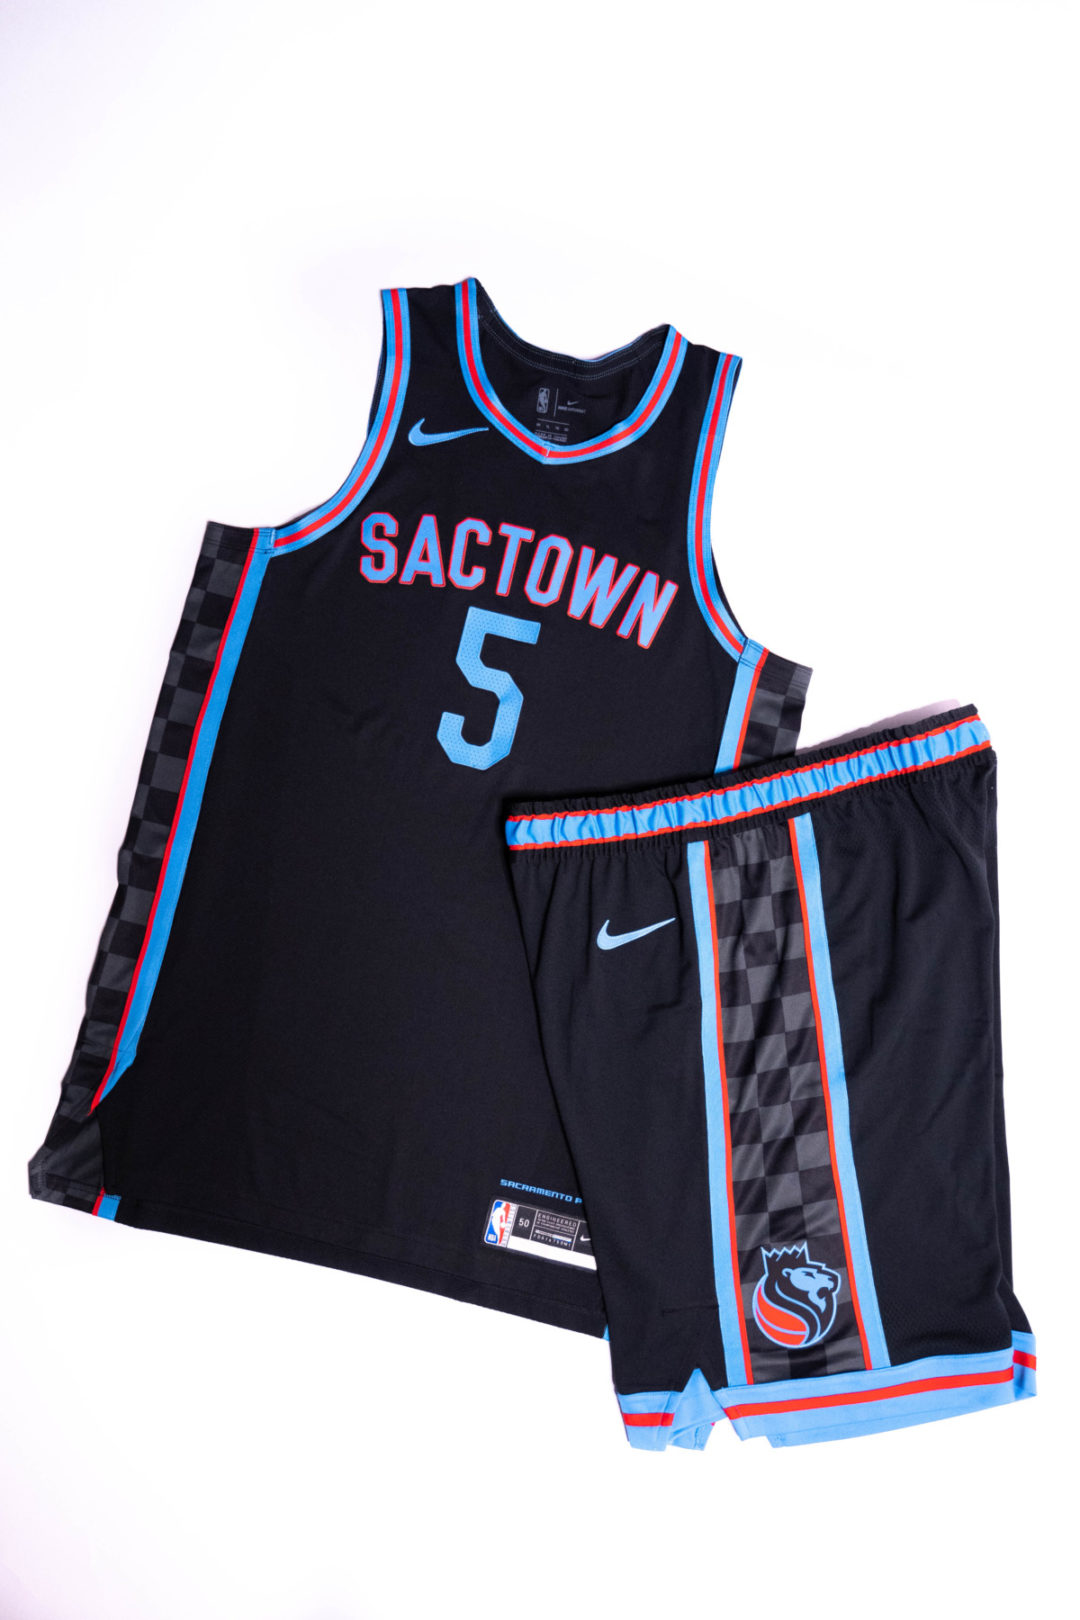 Sacramento Kings officially unveil the 202021 City Edition jerseys